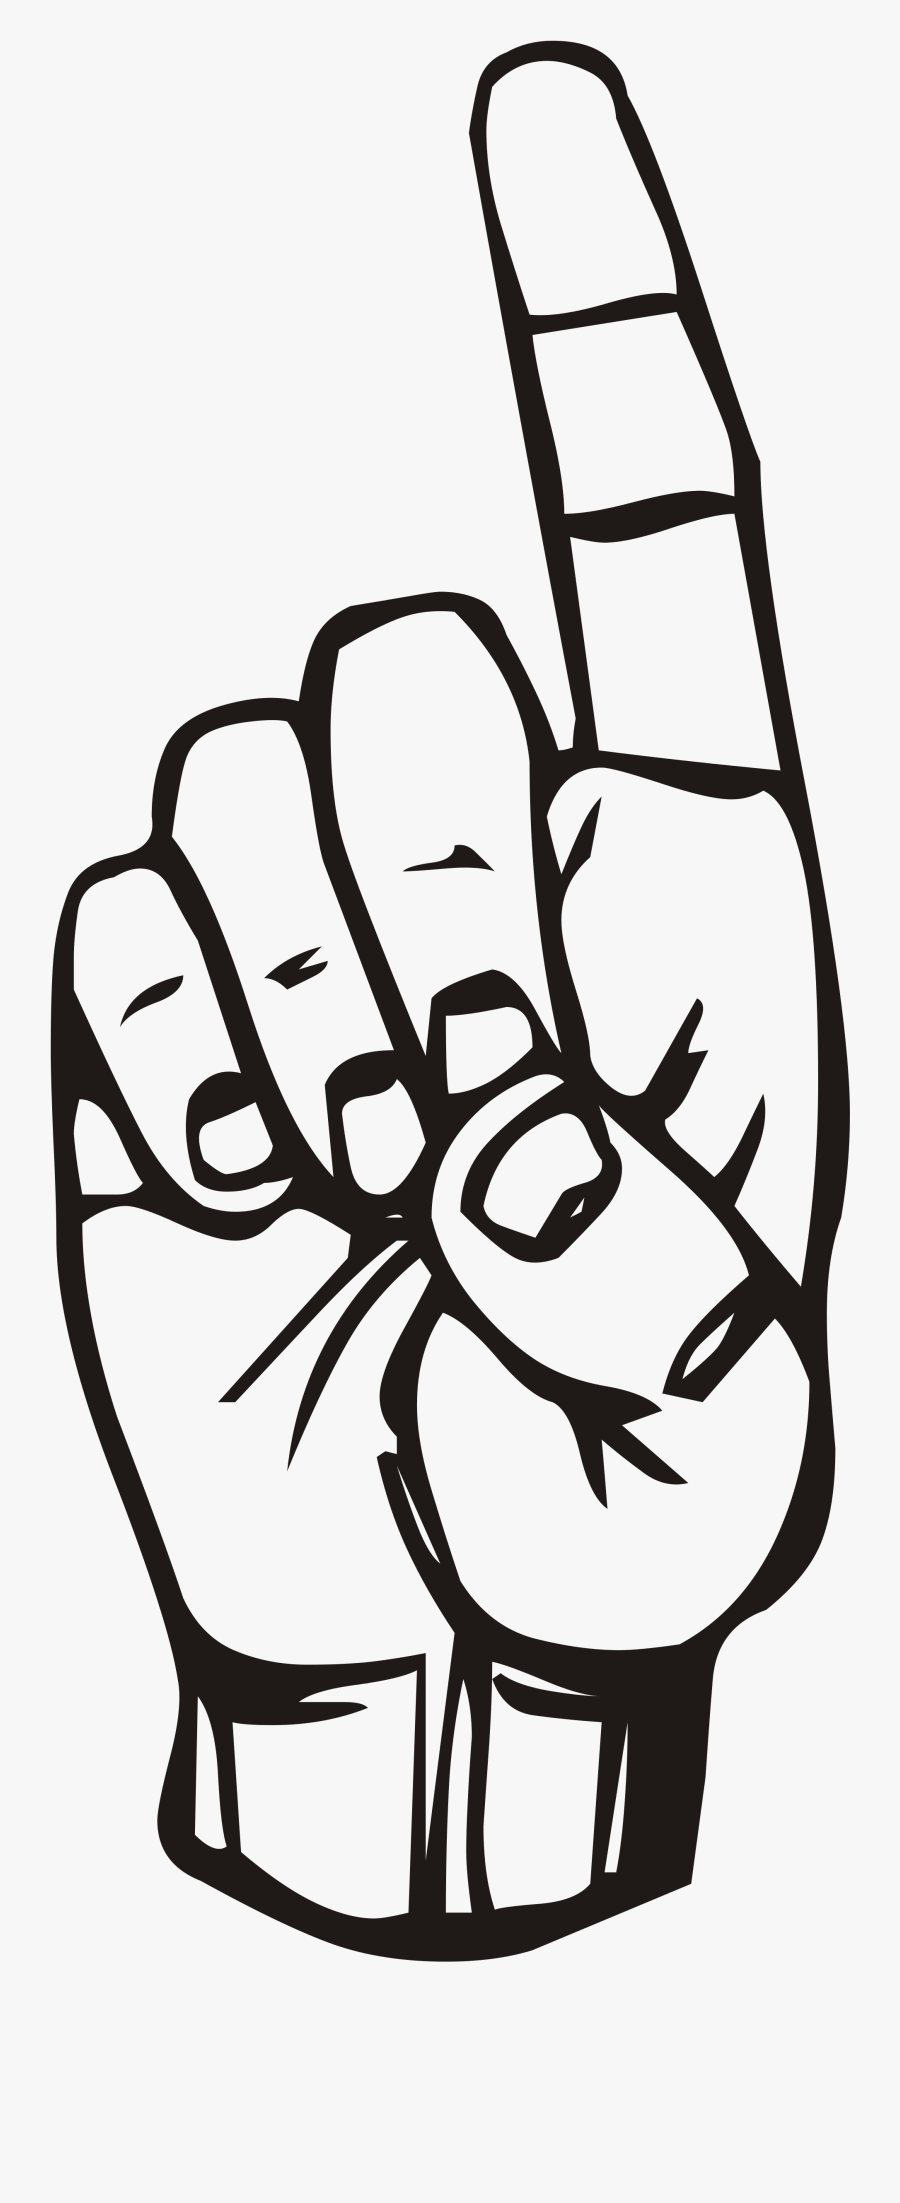 Pointing Finger Pictures - Sign Language Letter D Png, Transparent Clipart